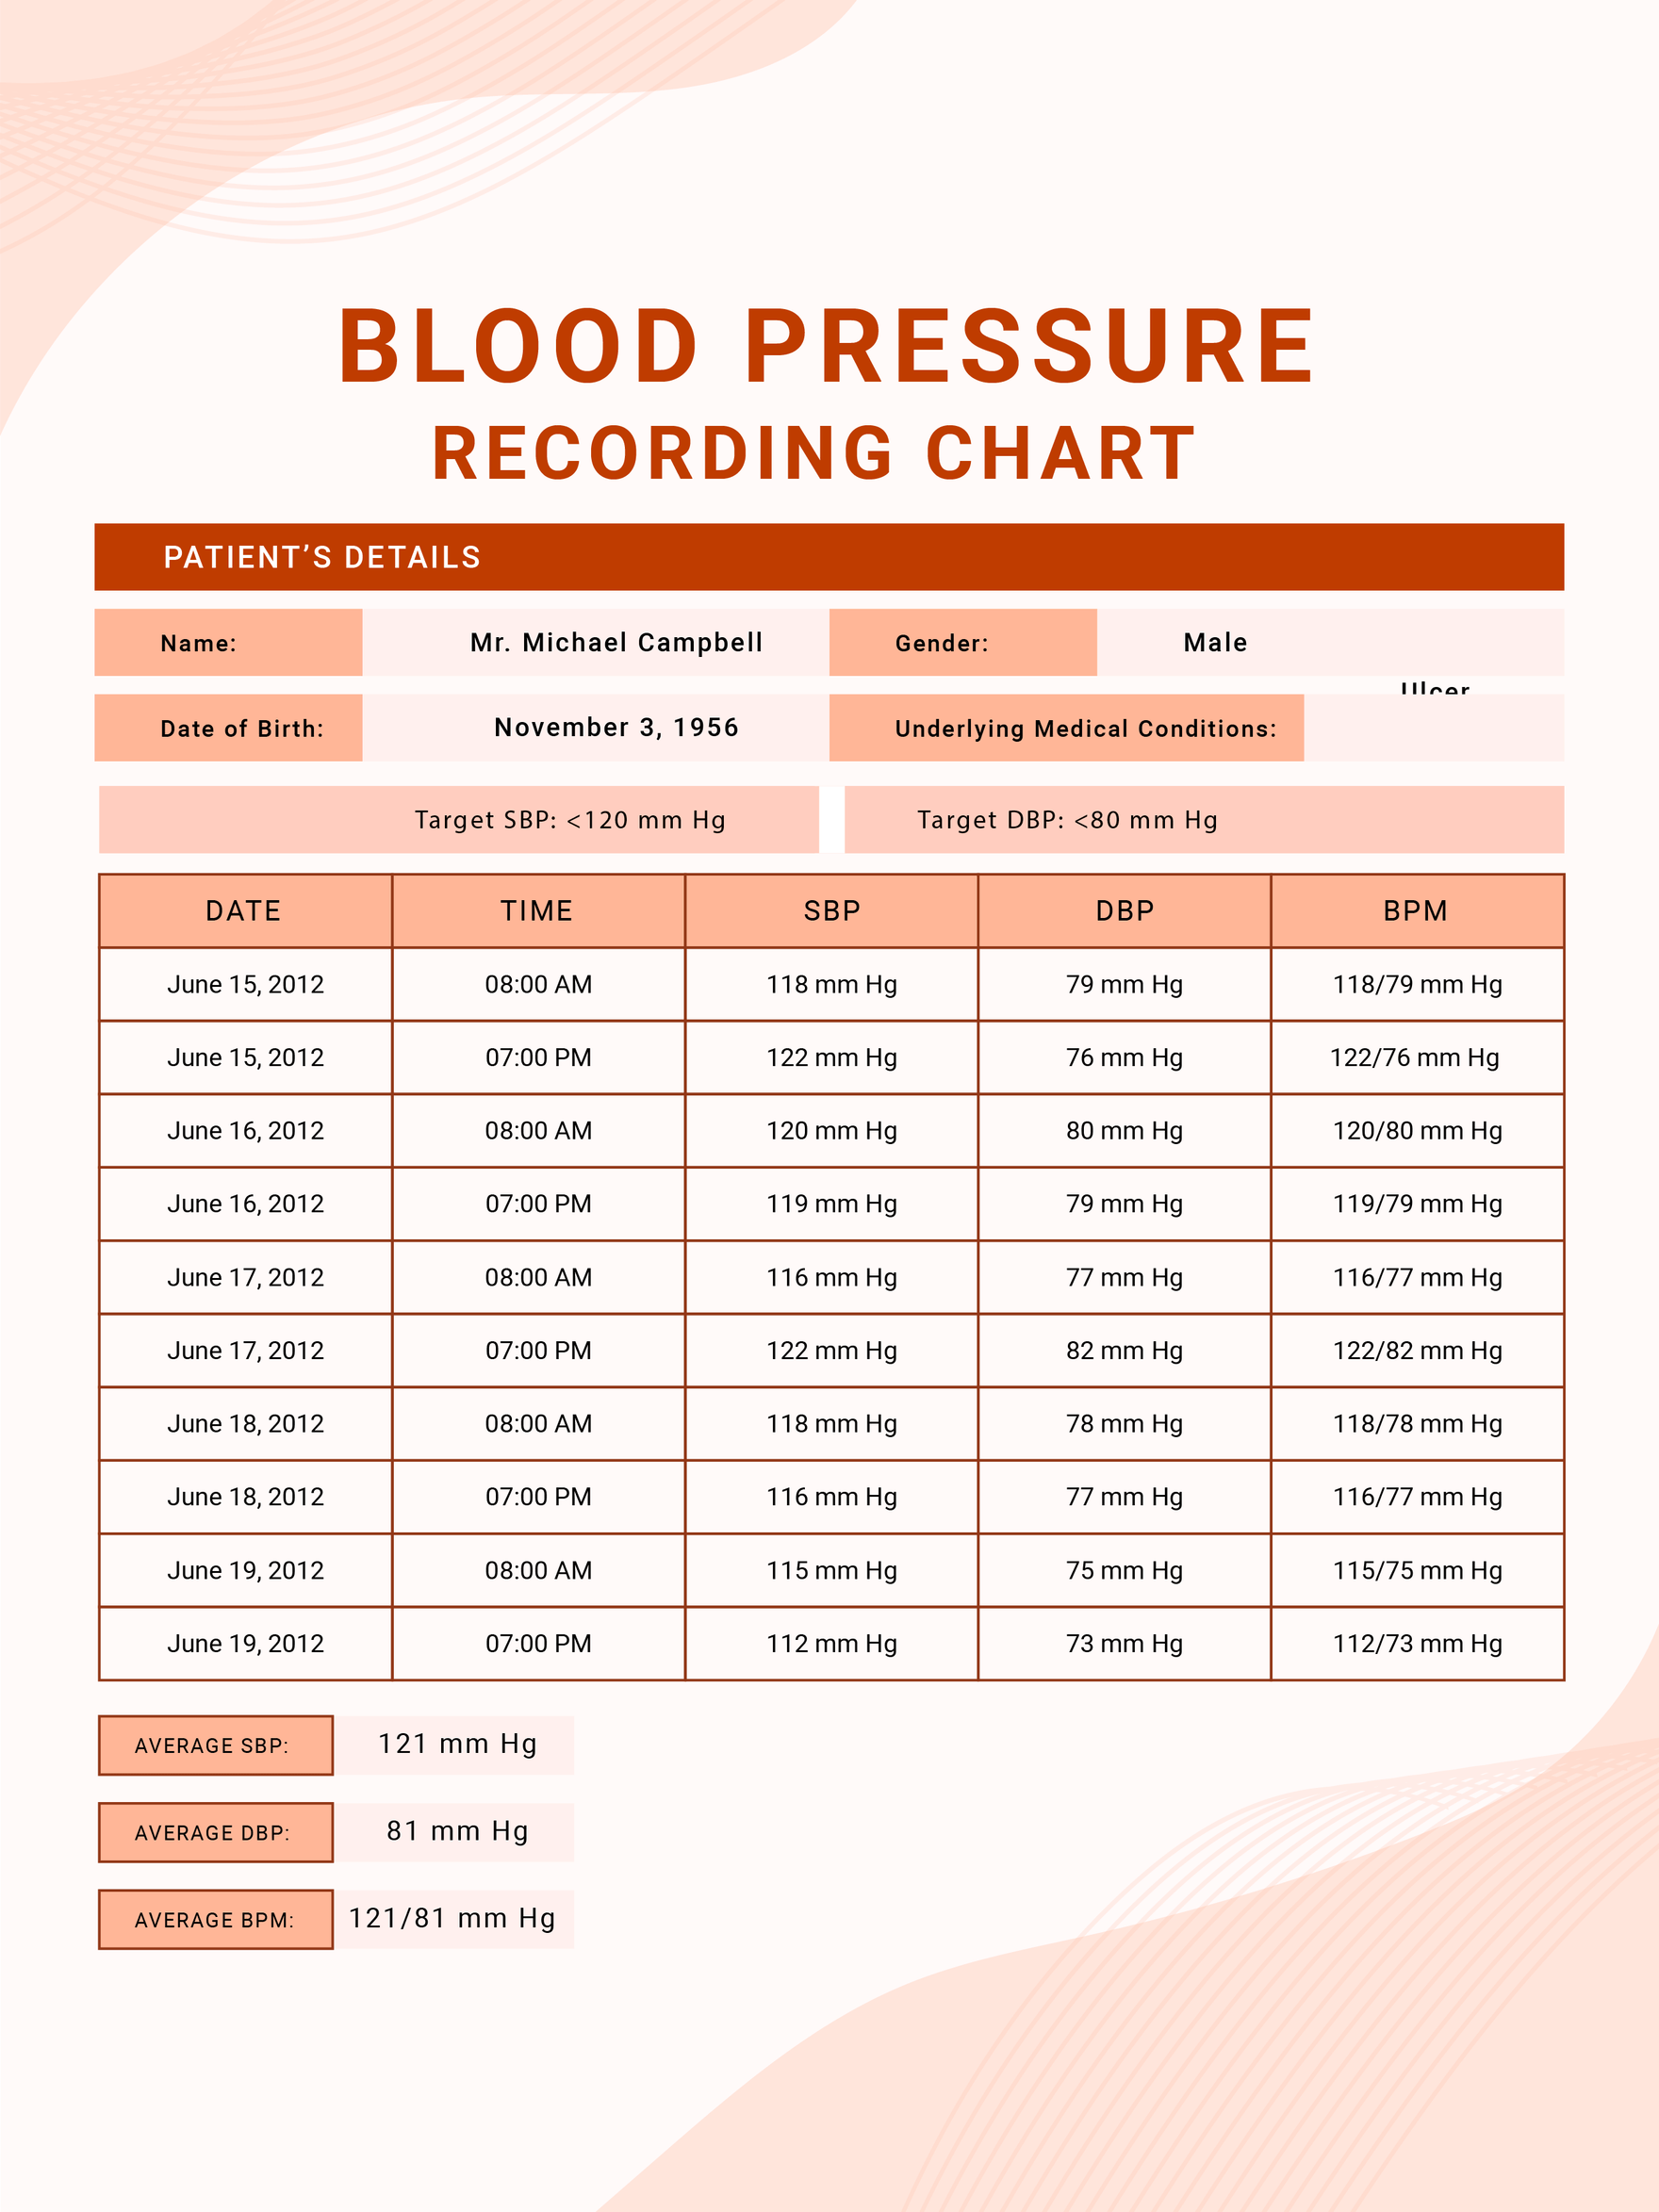 Blood Pressure Recording Chart